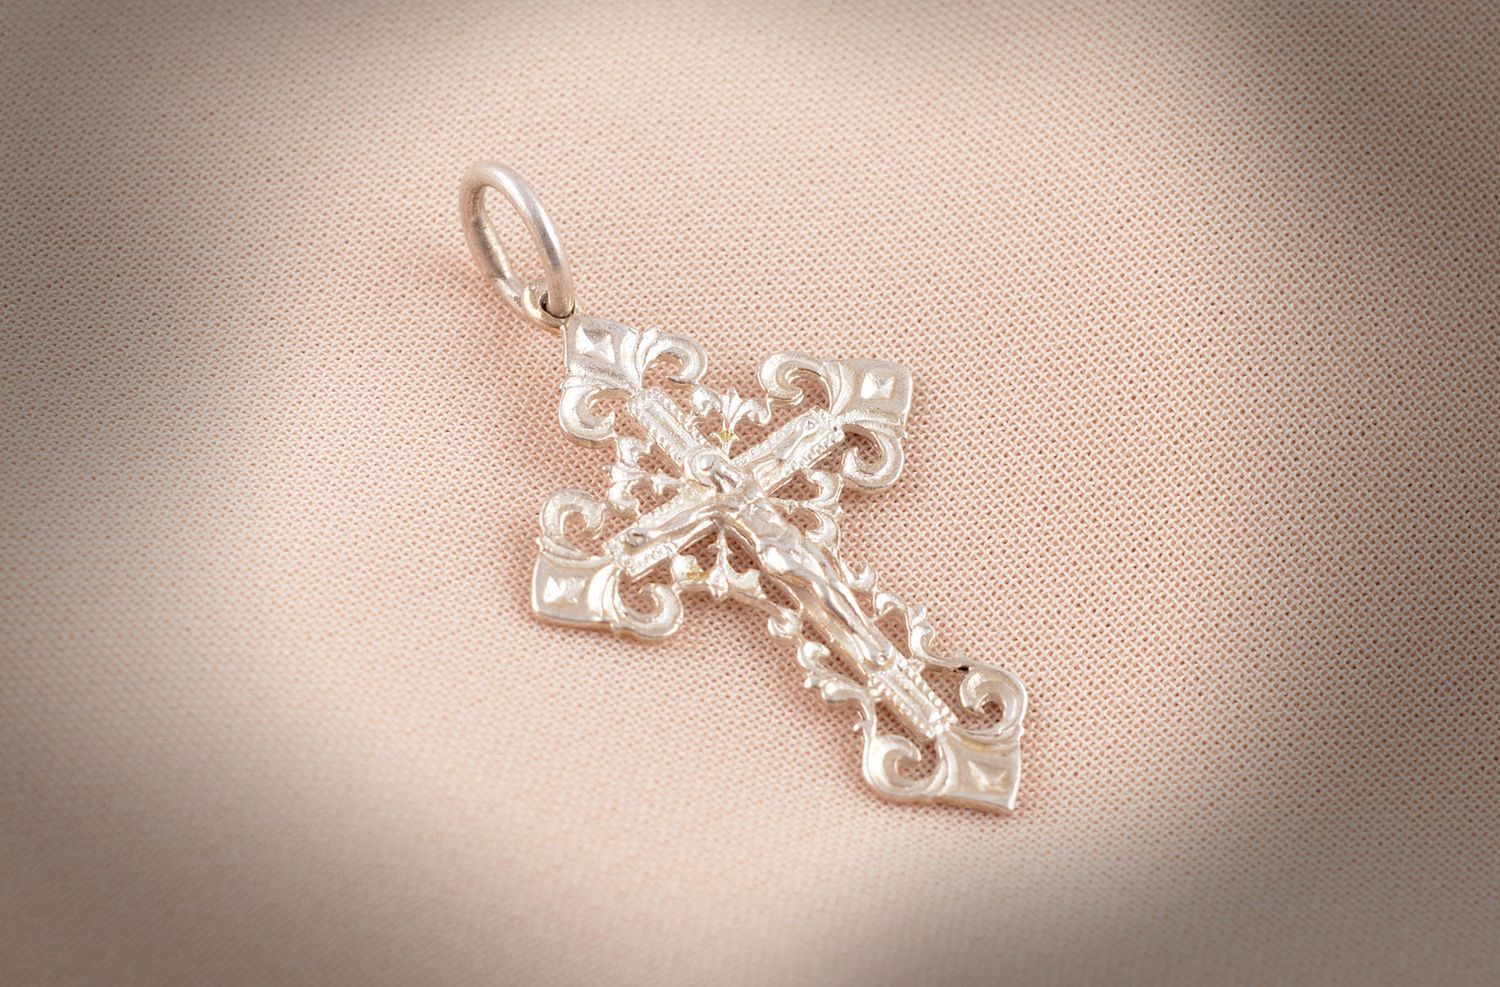 Handmade cross necklace bronze cross pendant necklace designer accessories photo 5